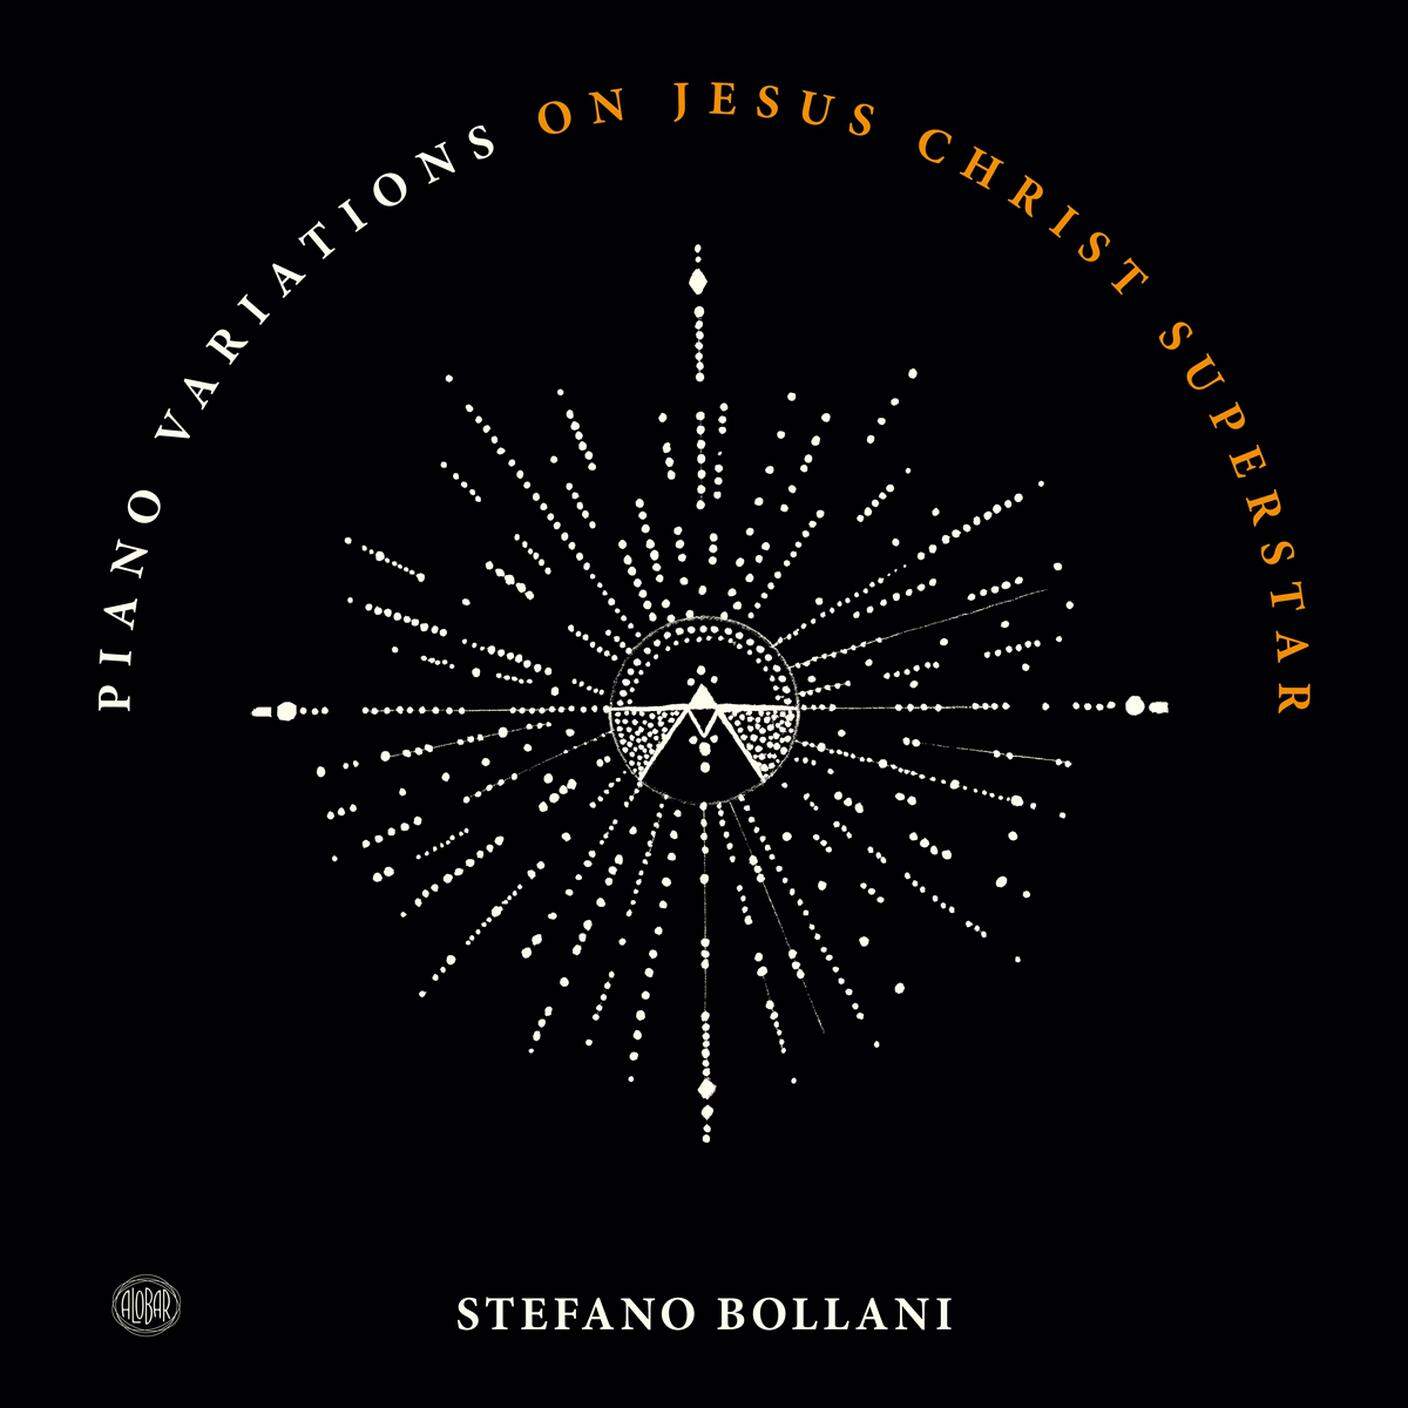 Stefano Bollani, "Piano Variations on Jesus Christ Superstar", Alobar records (dettaglio copertina)